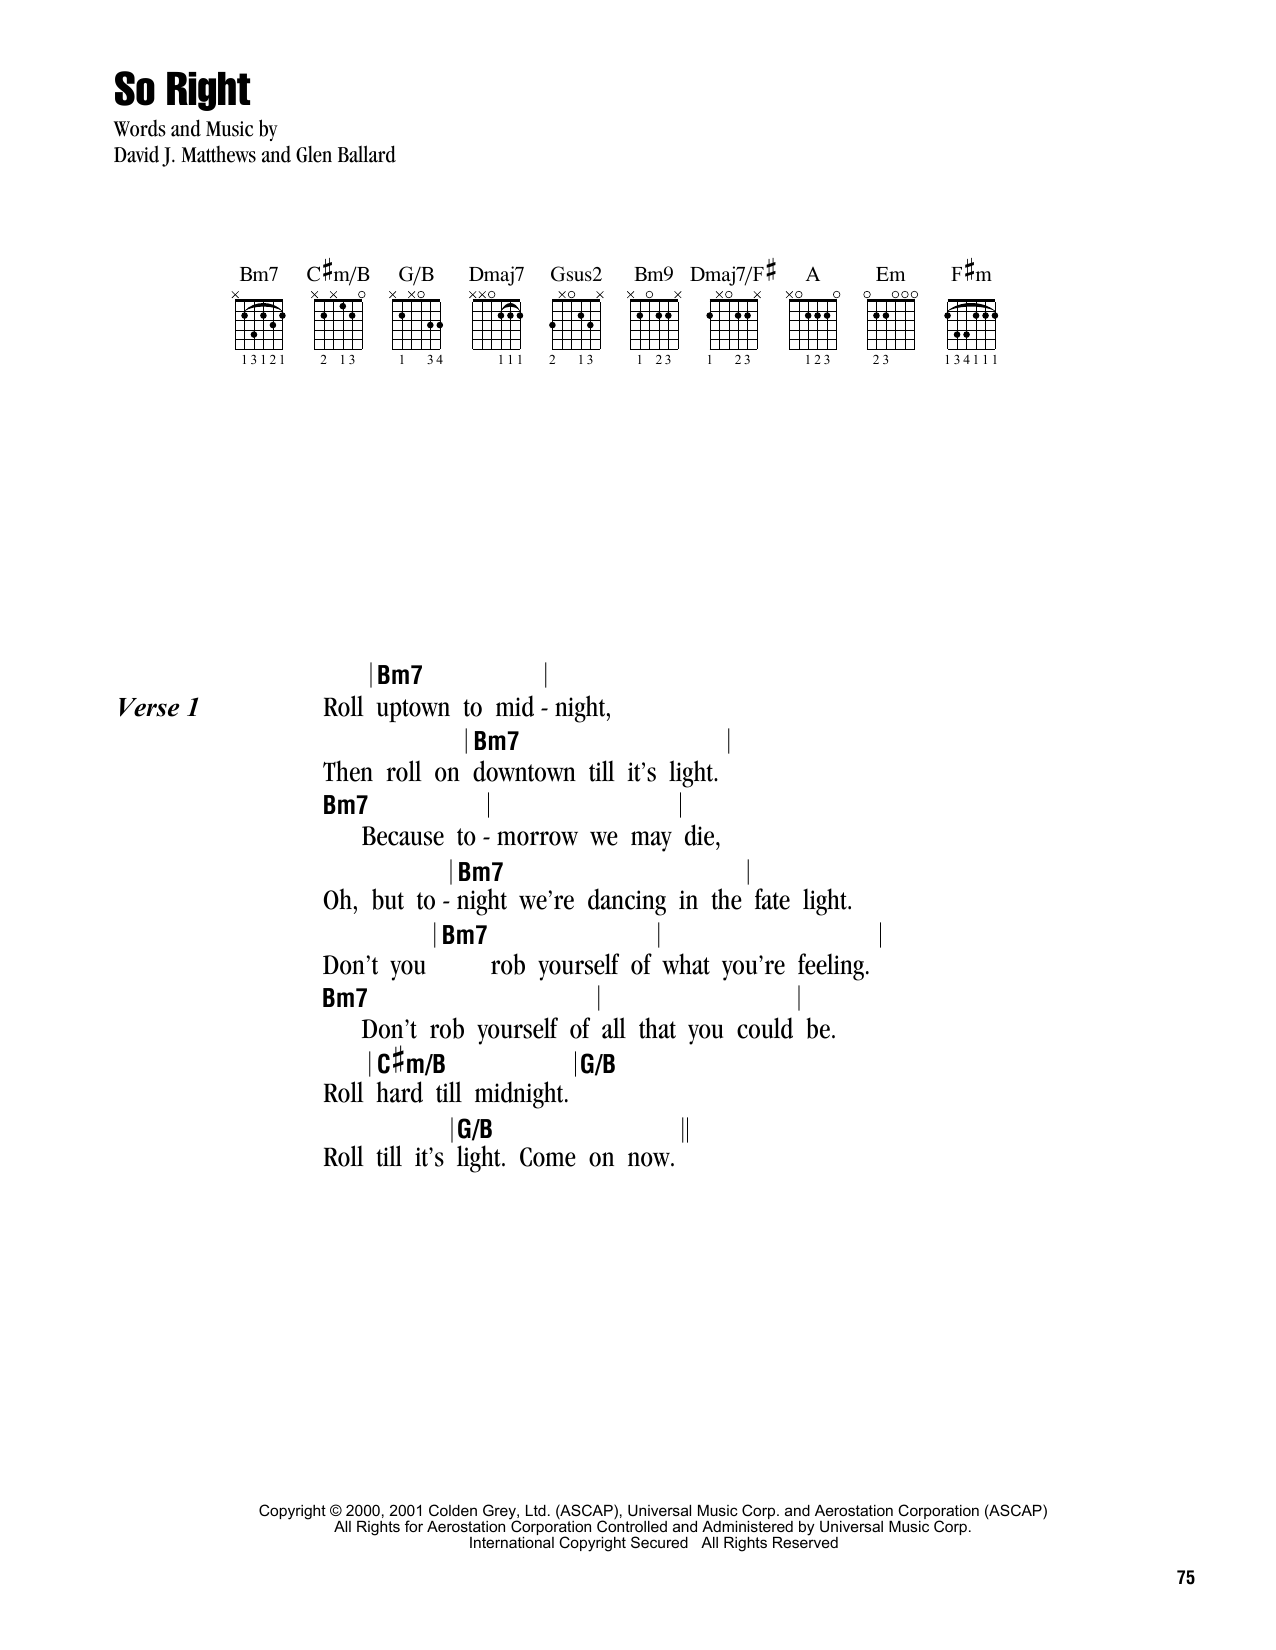 Dave Matthews Band So Right Sheet Music Notes & Chords for Lyrics & Chords - Download or Print PDF